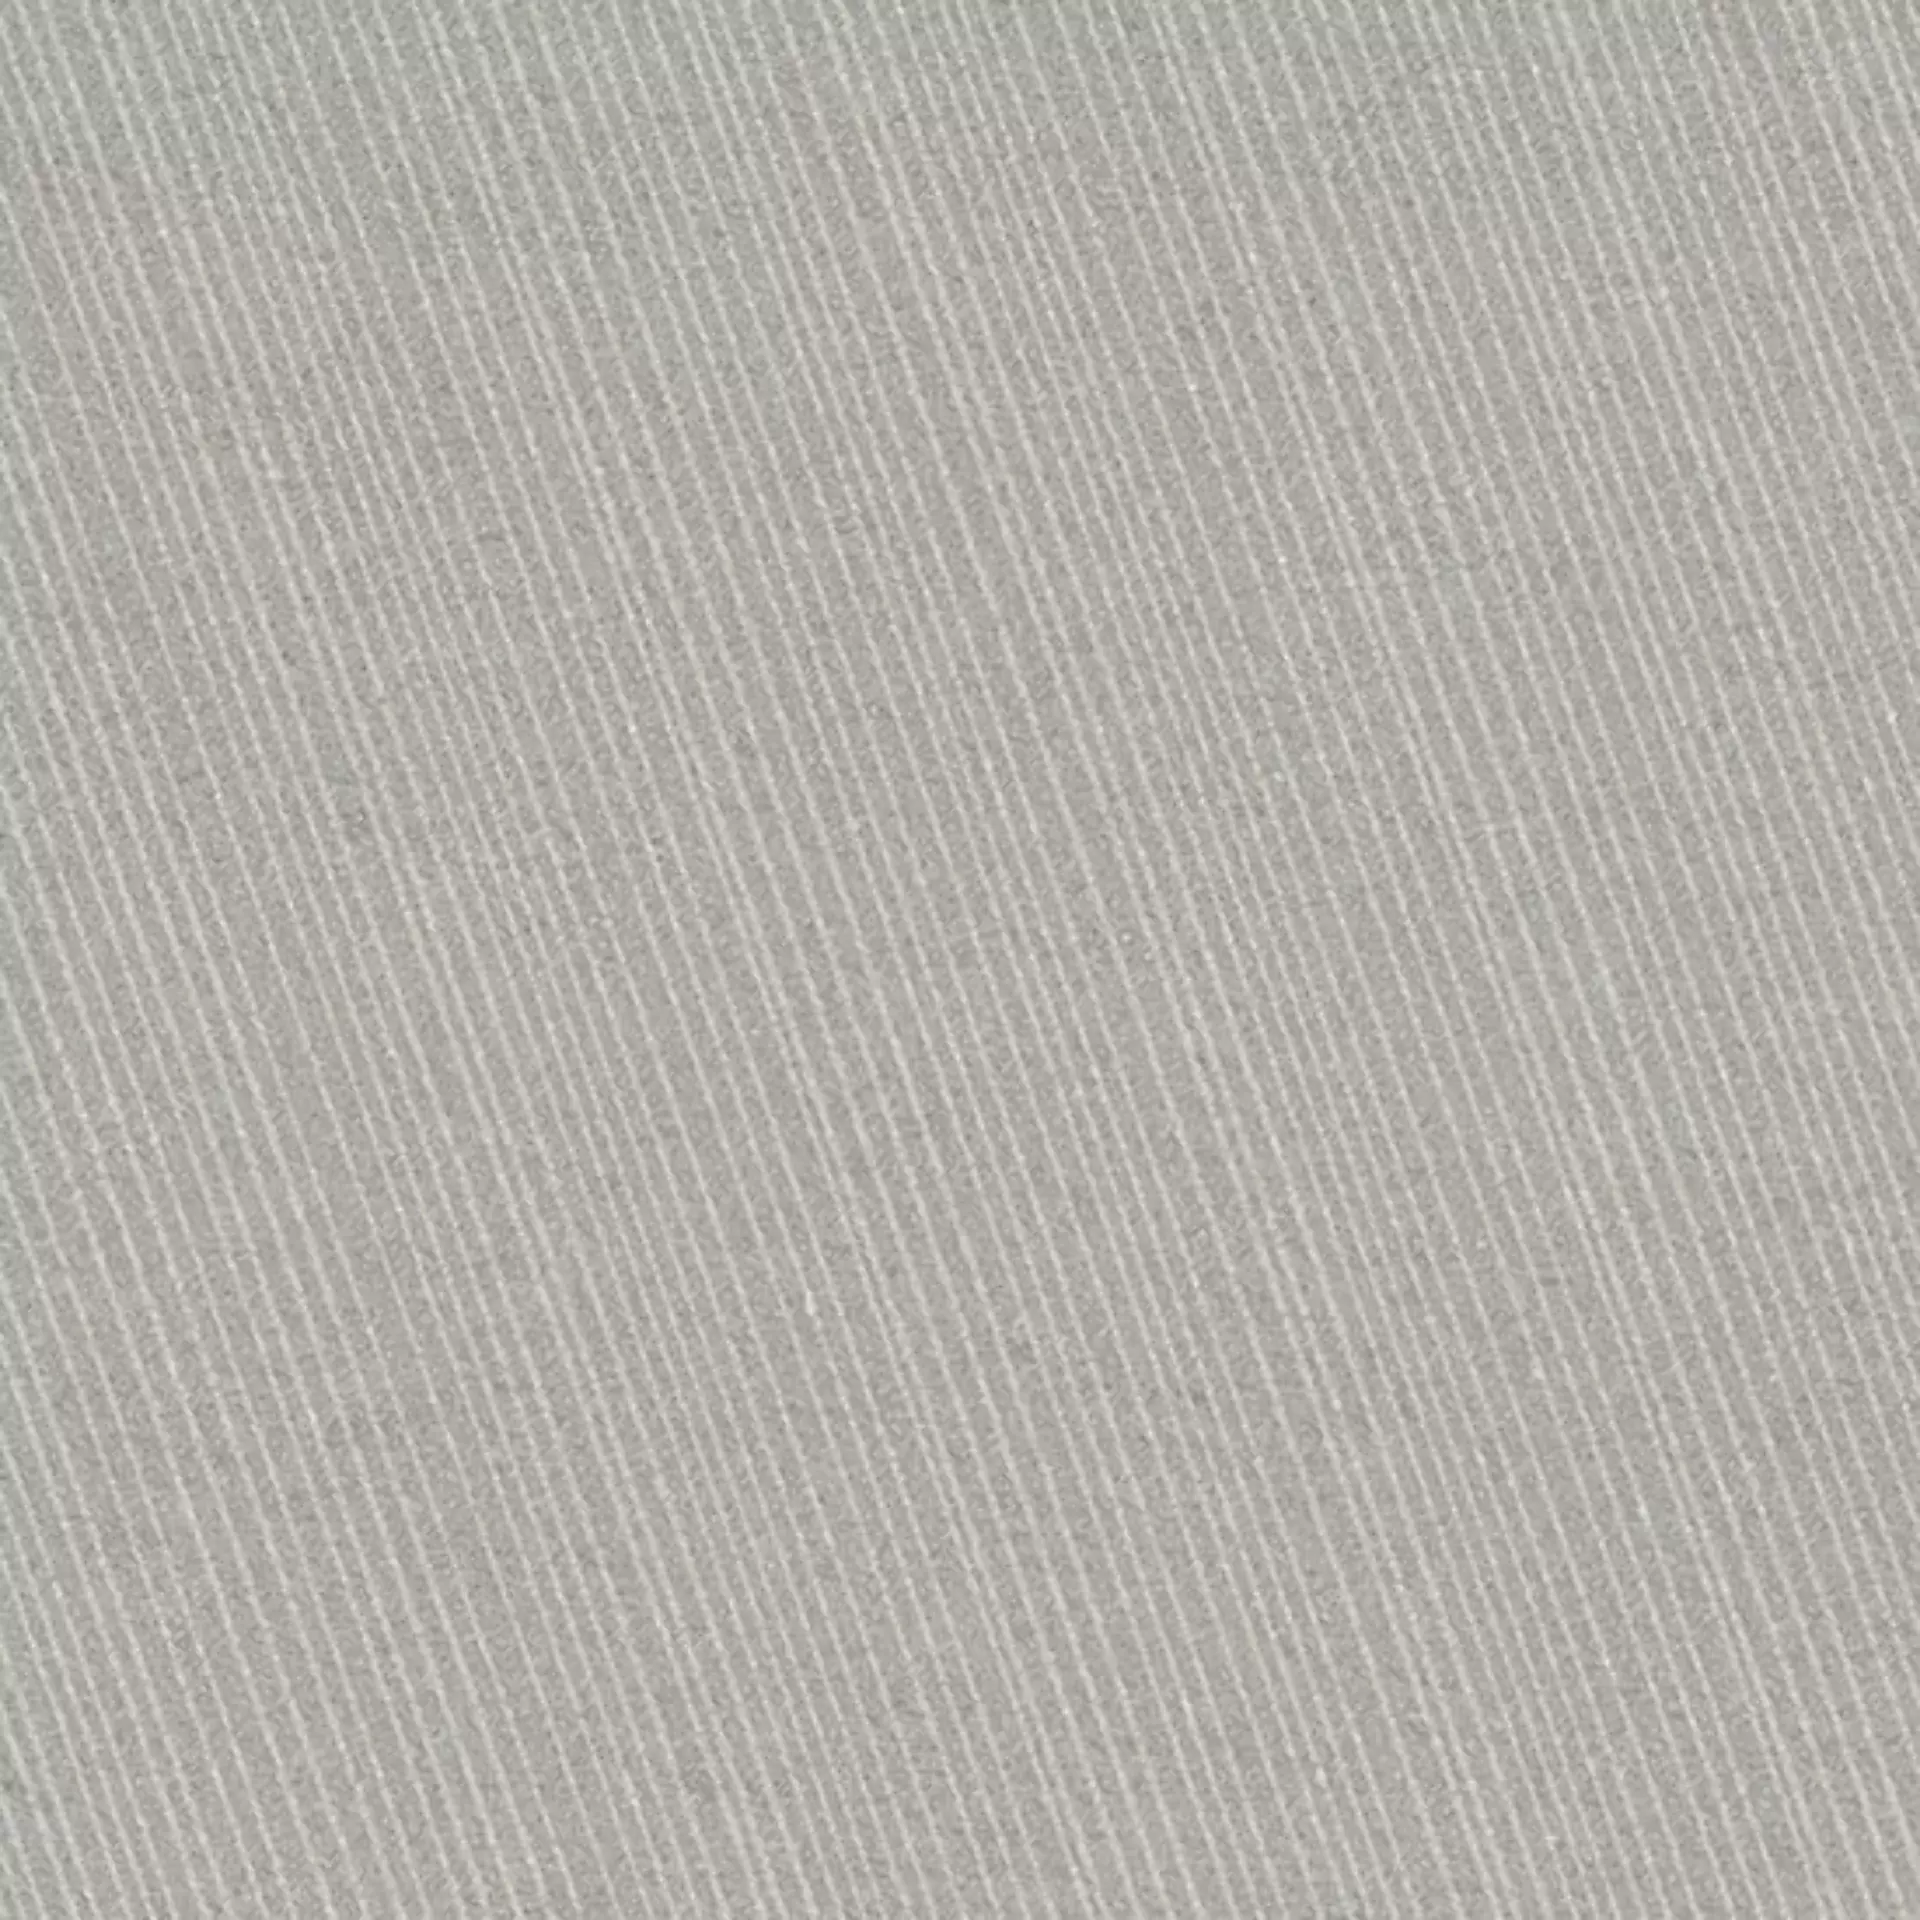 Coem Tweed Stone Grey Naturale 0TW603R 60x60cm rectified 10mm